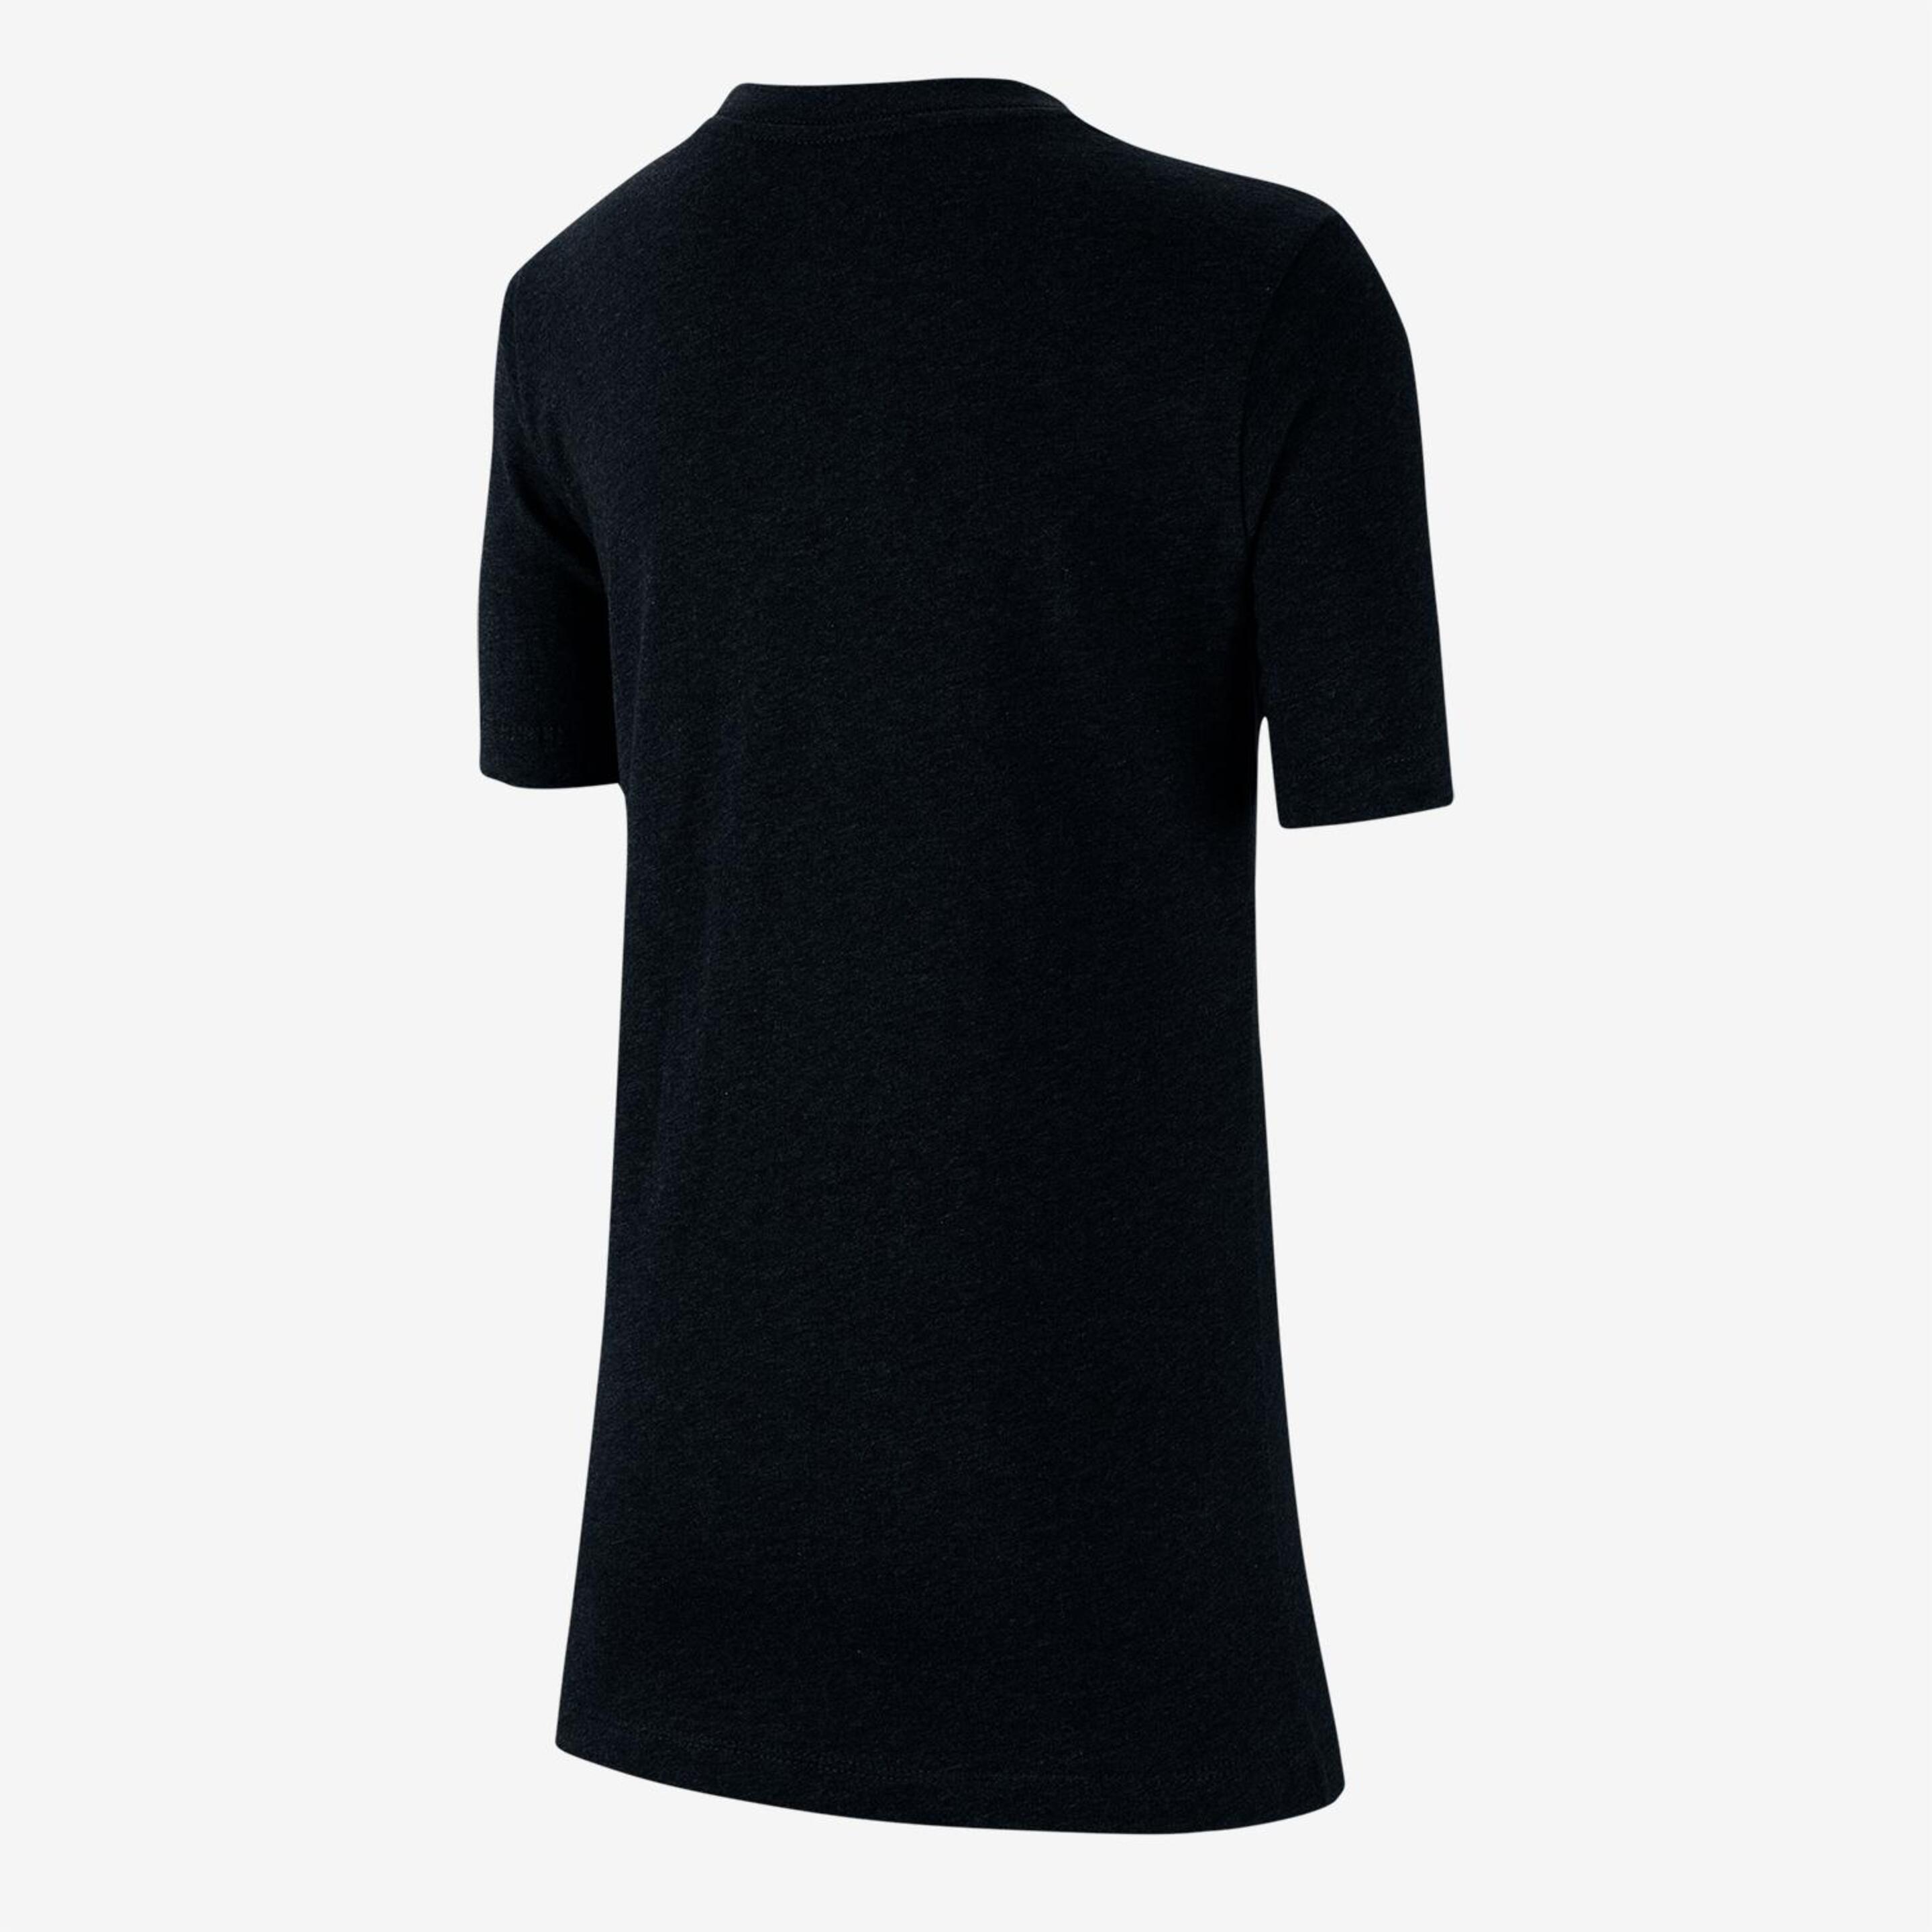 Nike Futura -Negro- Camiseta Chico